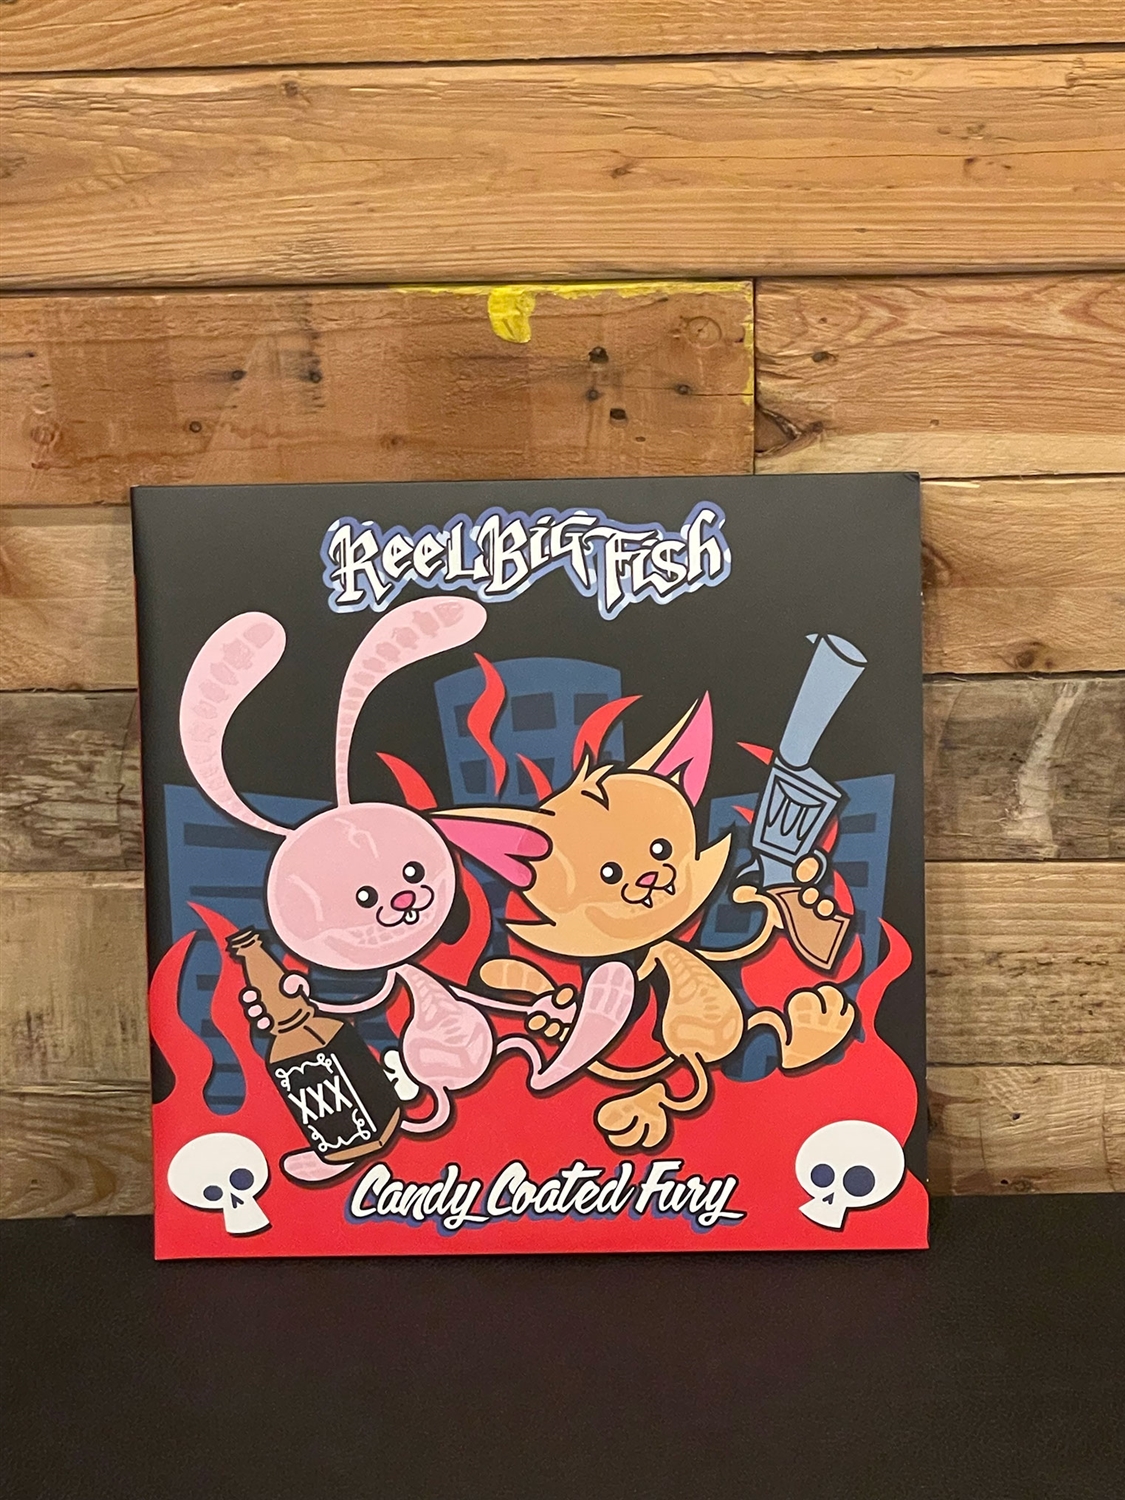 Vinyl Reel Big Fish - Candy Coated Fury [vinyl] ☆ SUPERSHOP ☆ tvoj obchod ☆  cd & dvd, vinyly, filmové DVD a Bluray